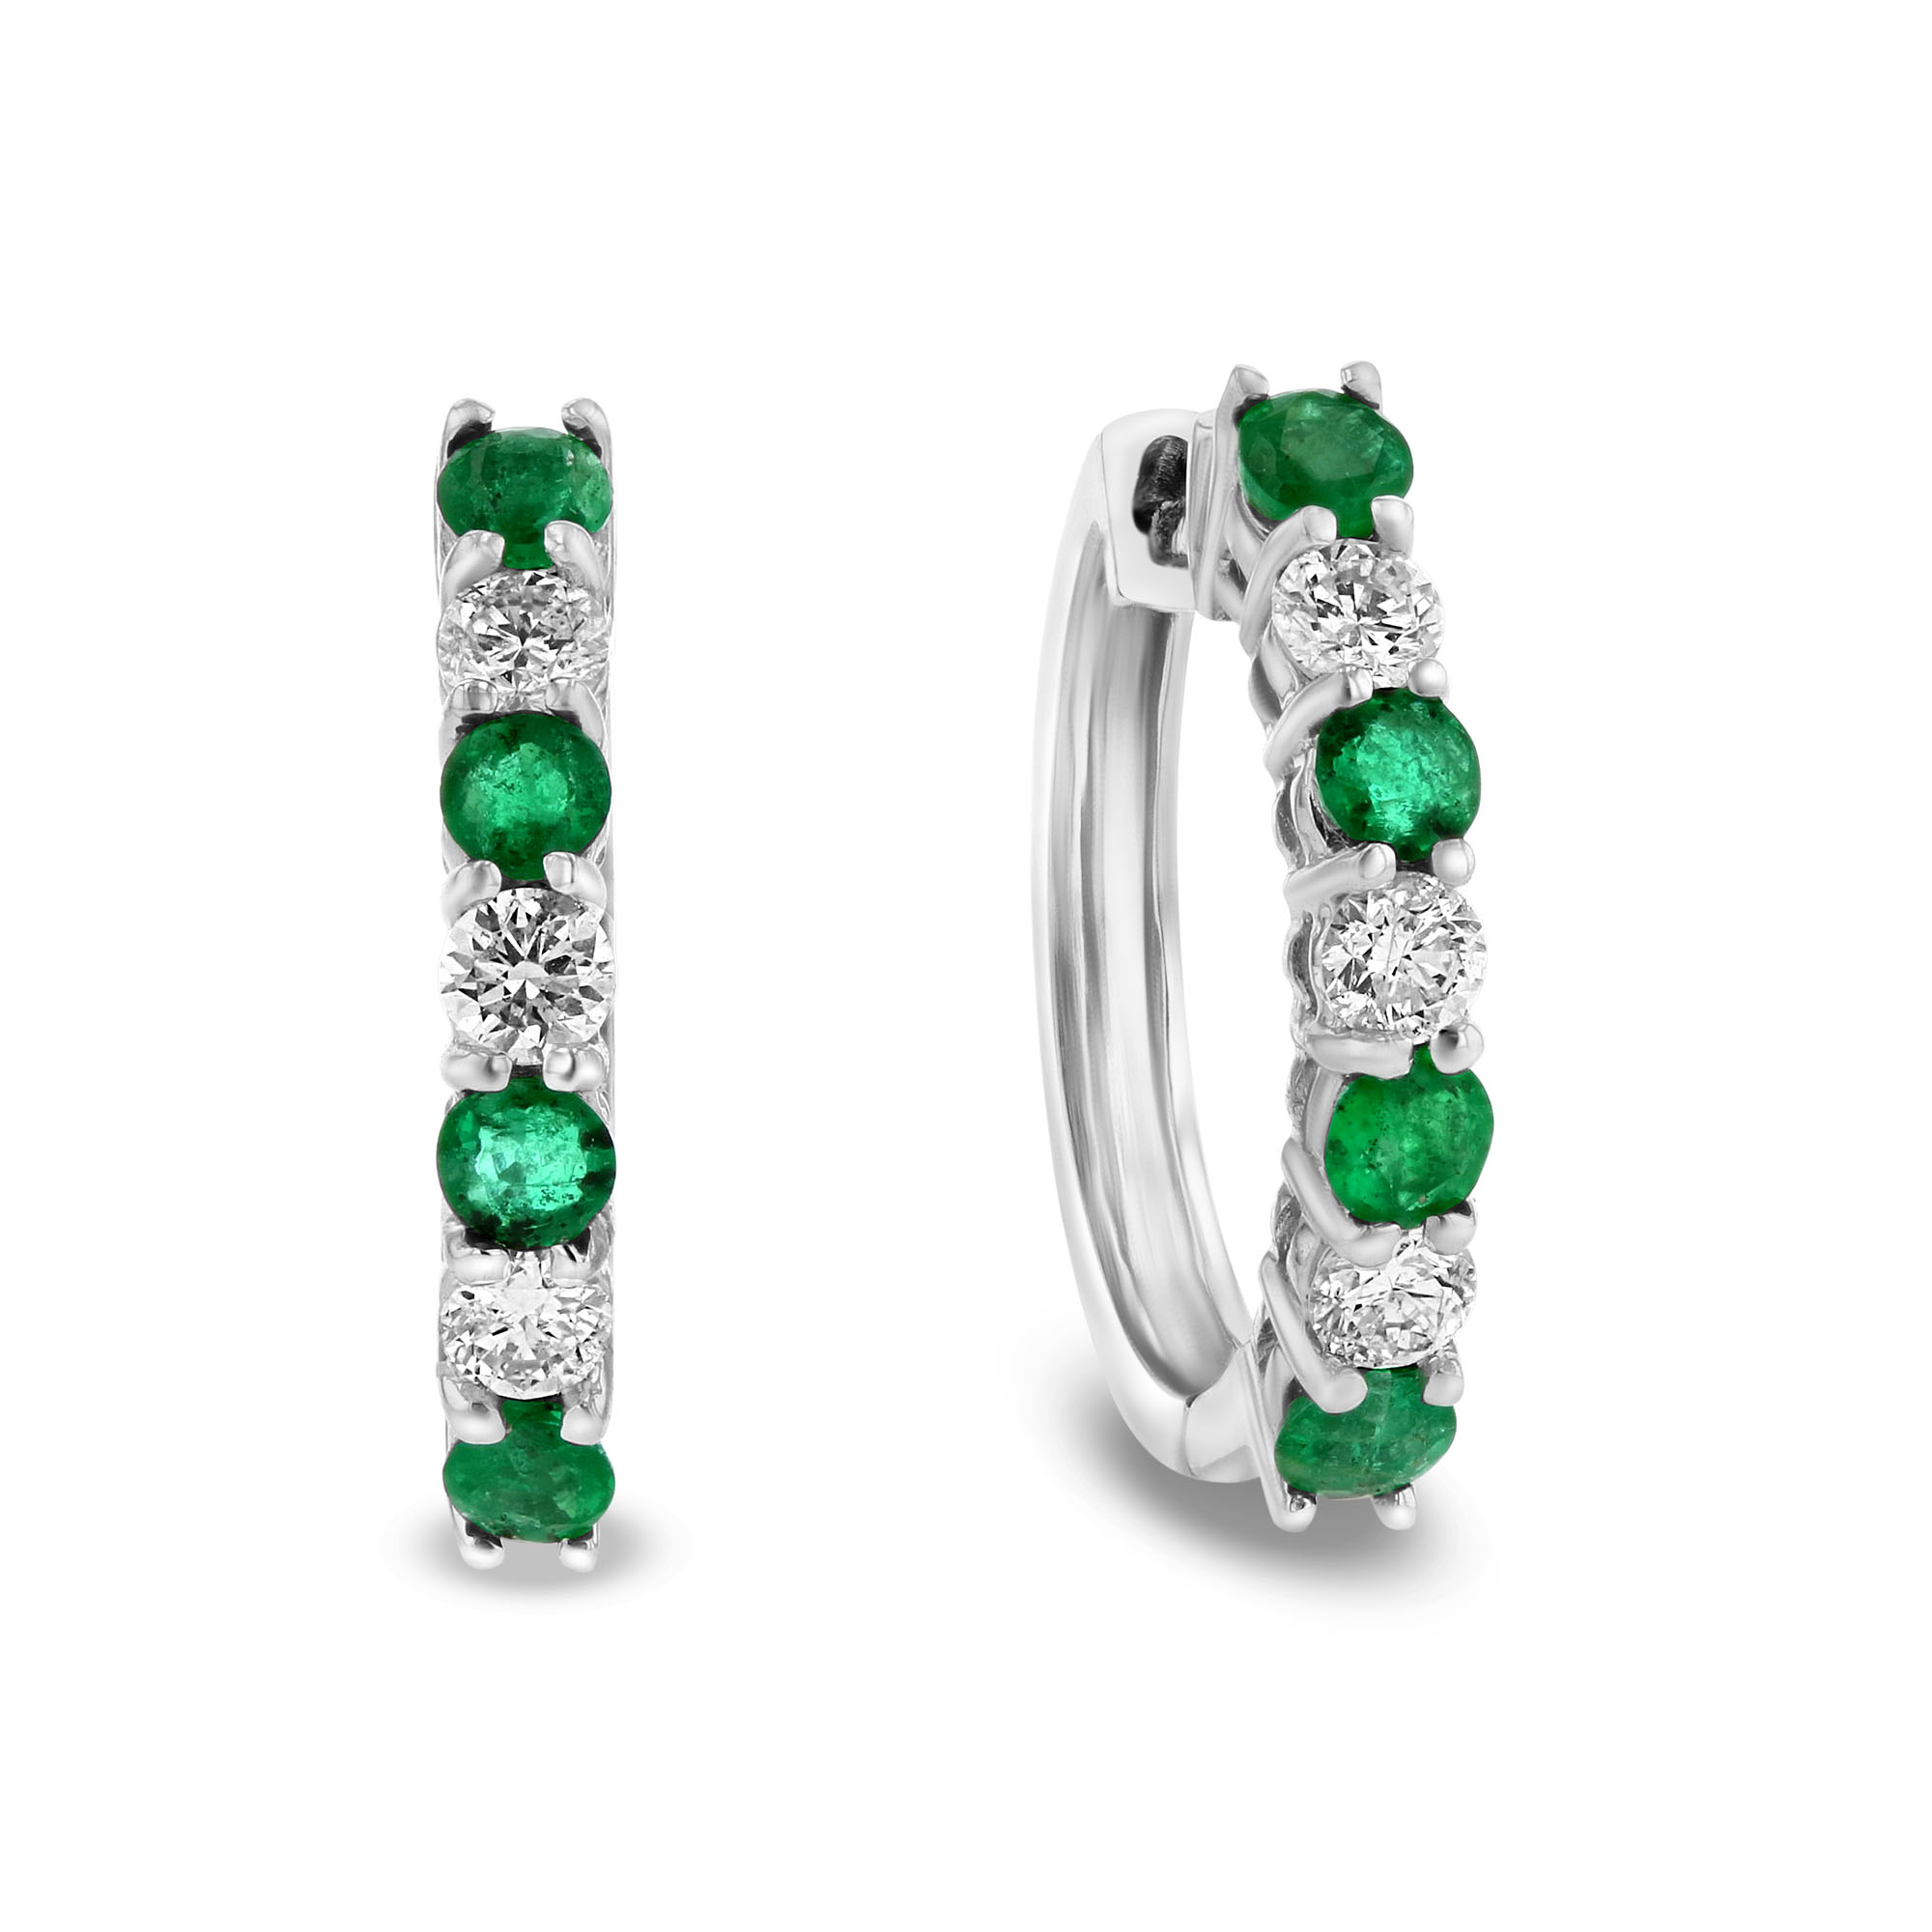 1.15ctw Diamond and Emerald Hoop Earrings in 14k White Gold